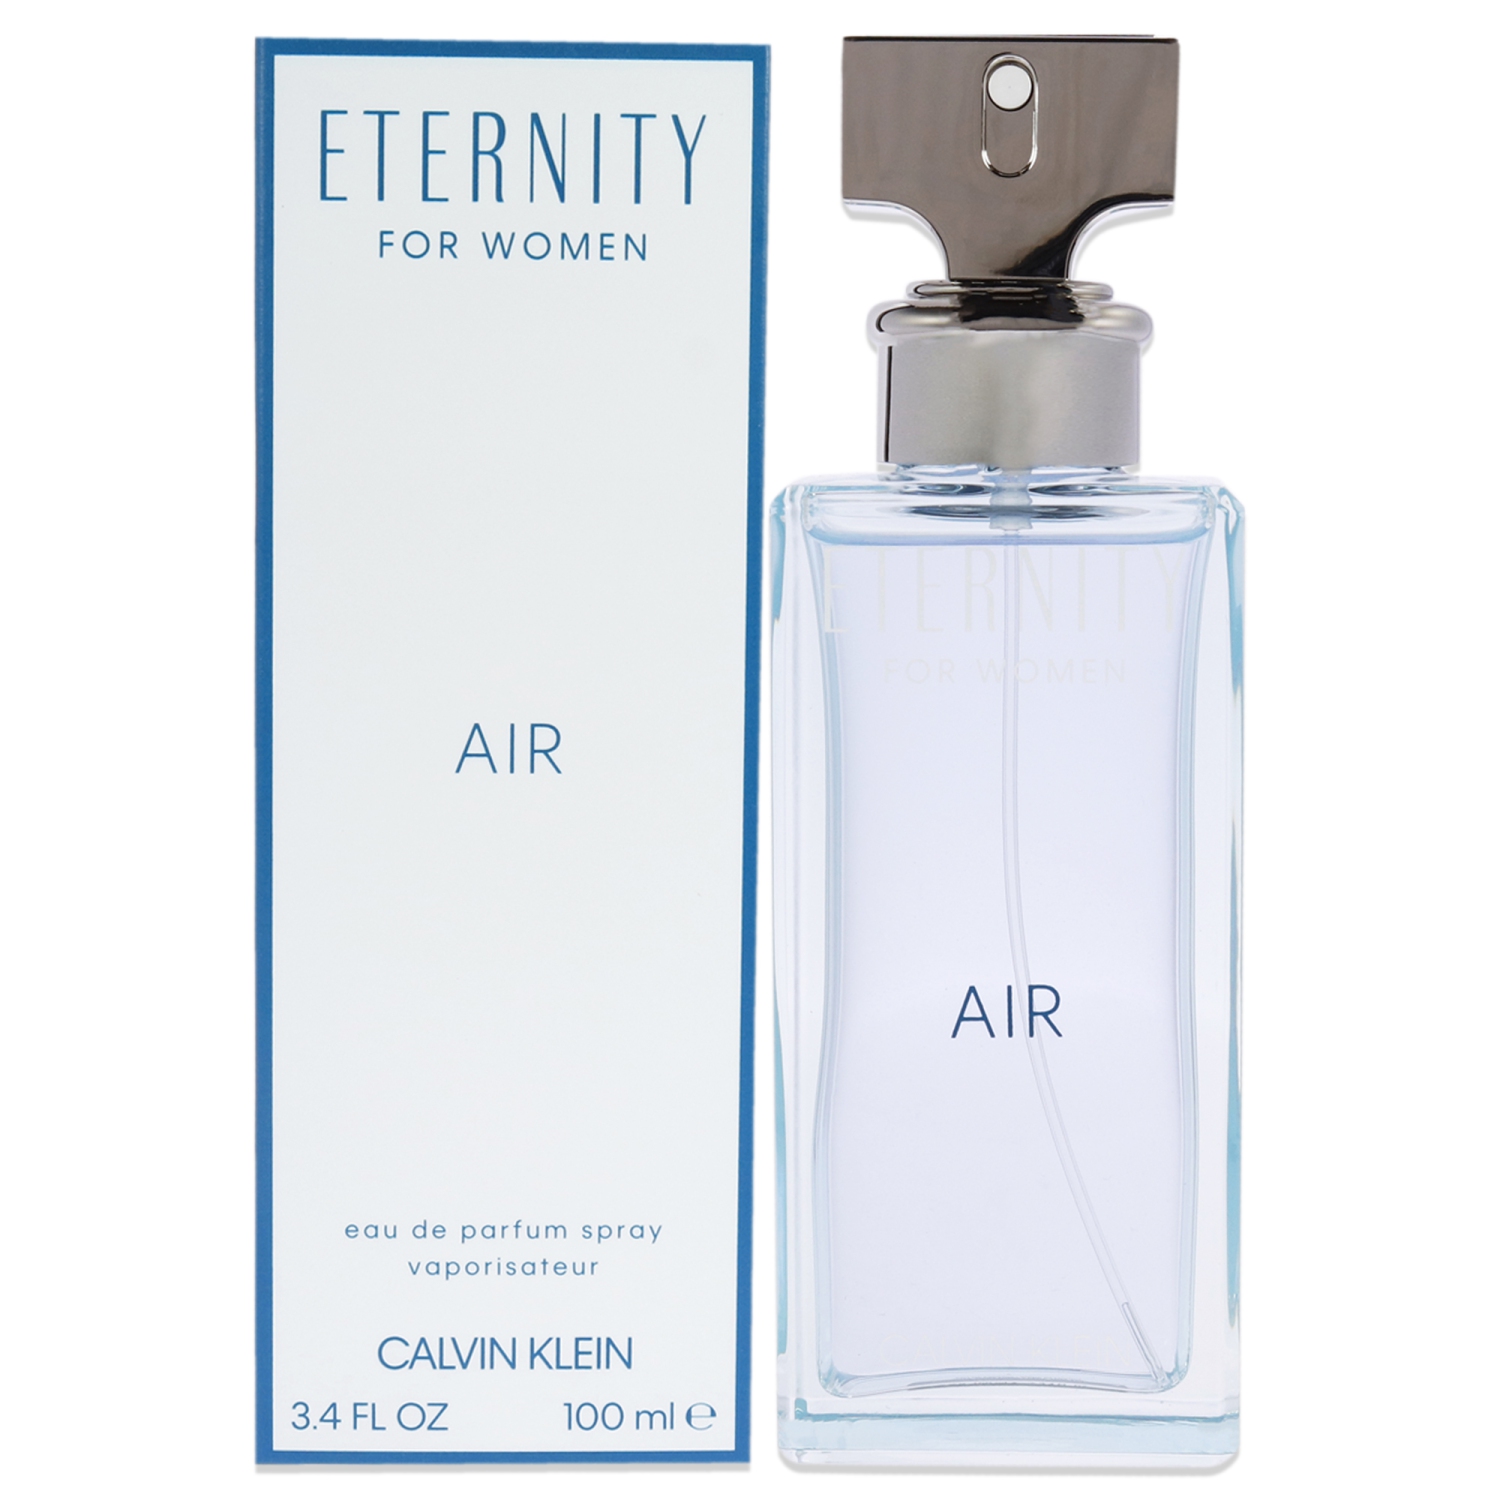 Eternity Air by Calvin Klein for Women - 3.4 oz EDP Spray